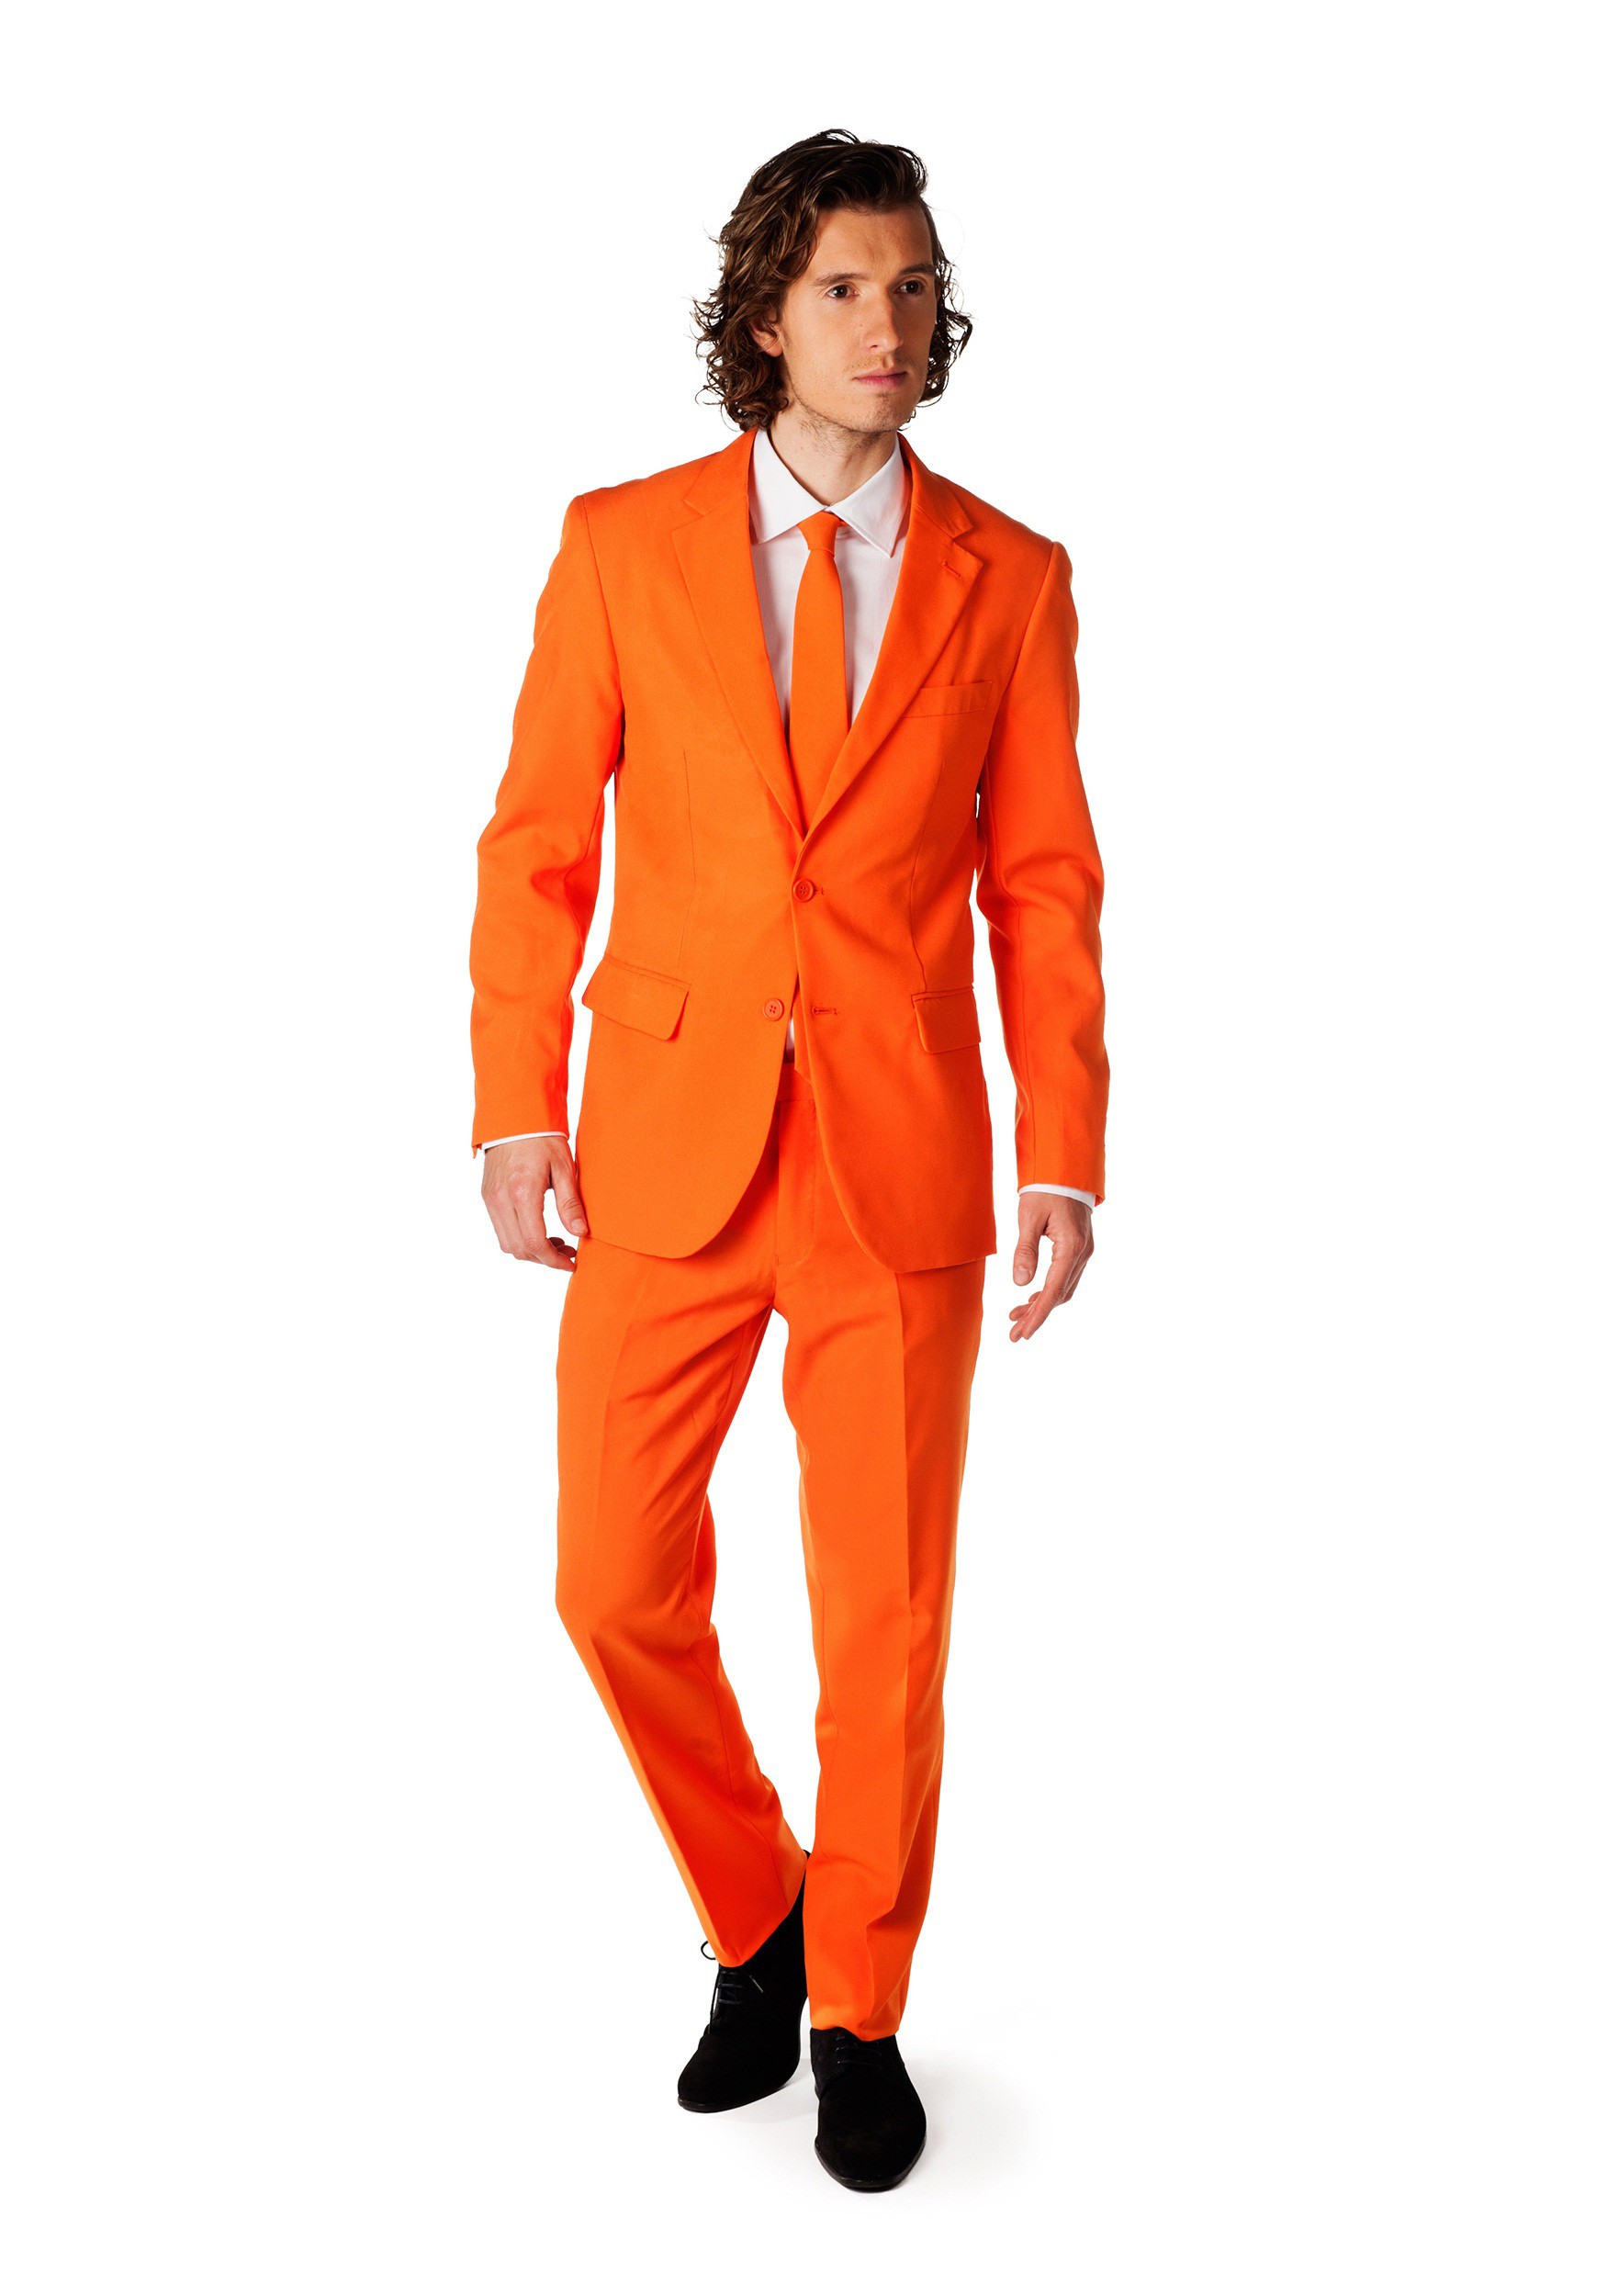 Men's OppoSuits Orange Fancy Dress Costume Suit